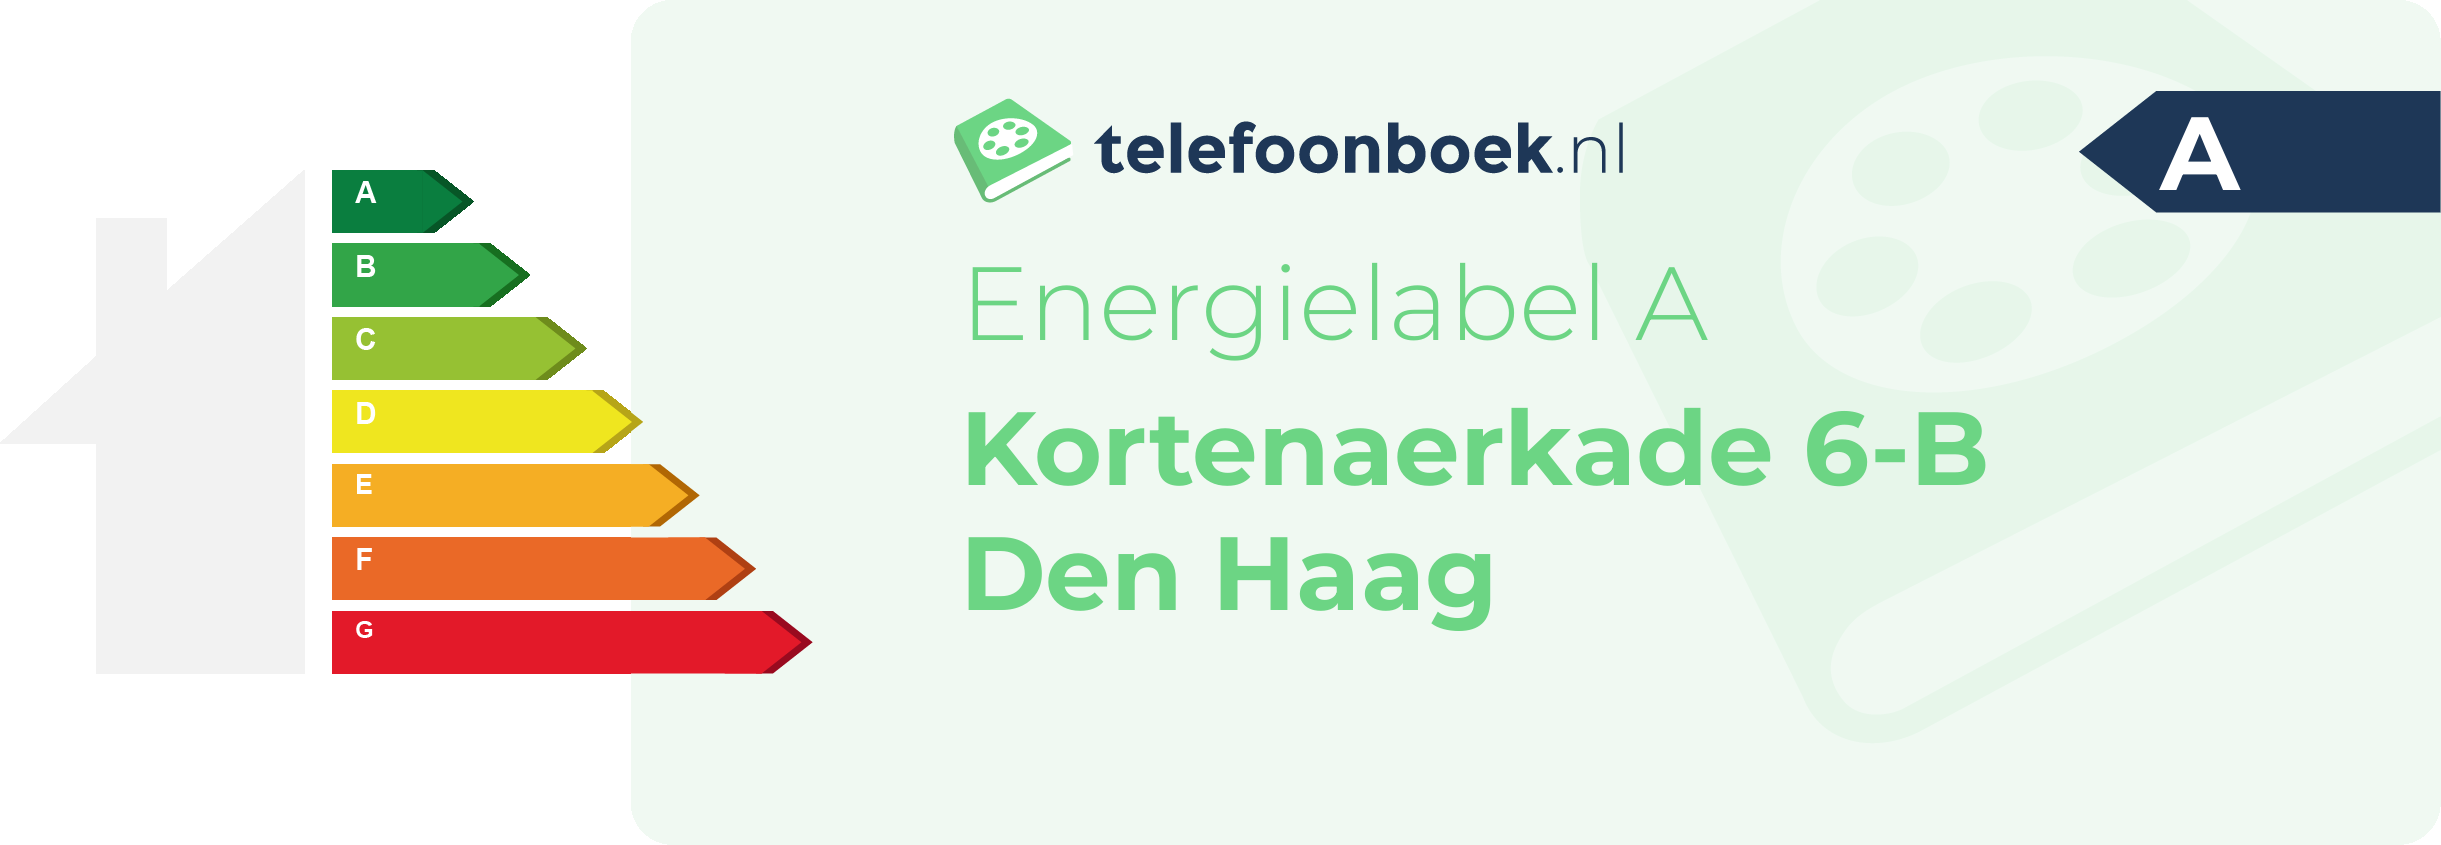 Energielabel Kortenaerkade 6-B Den Haag